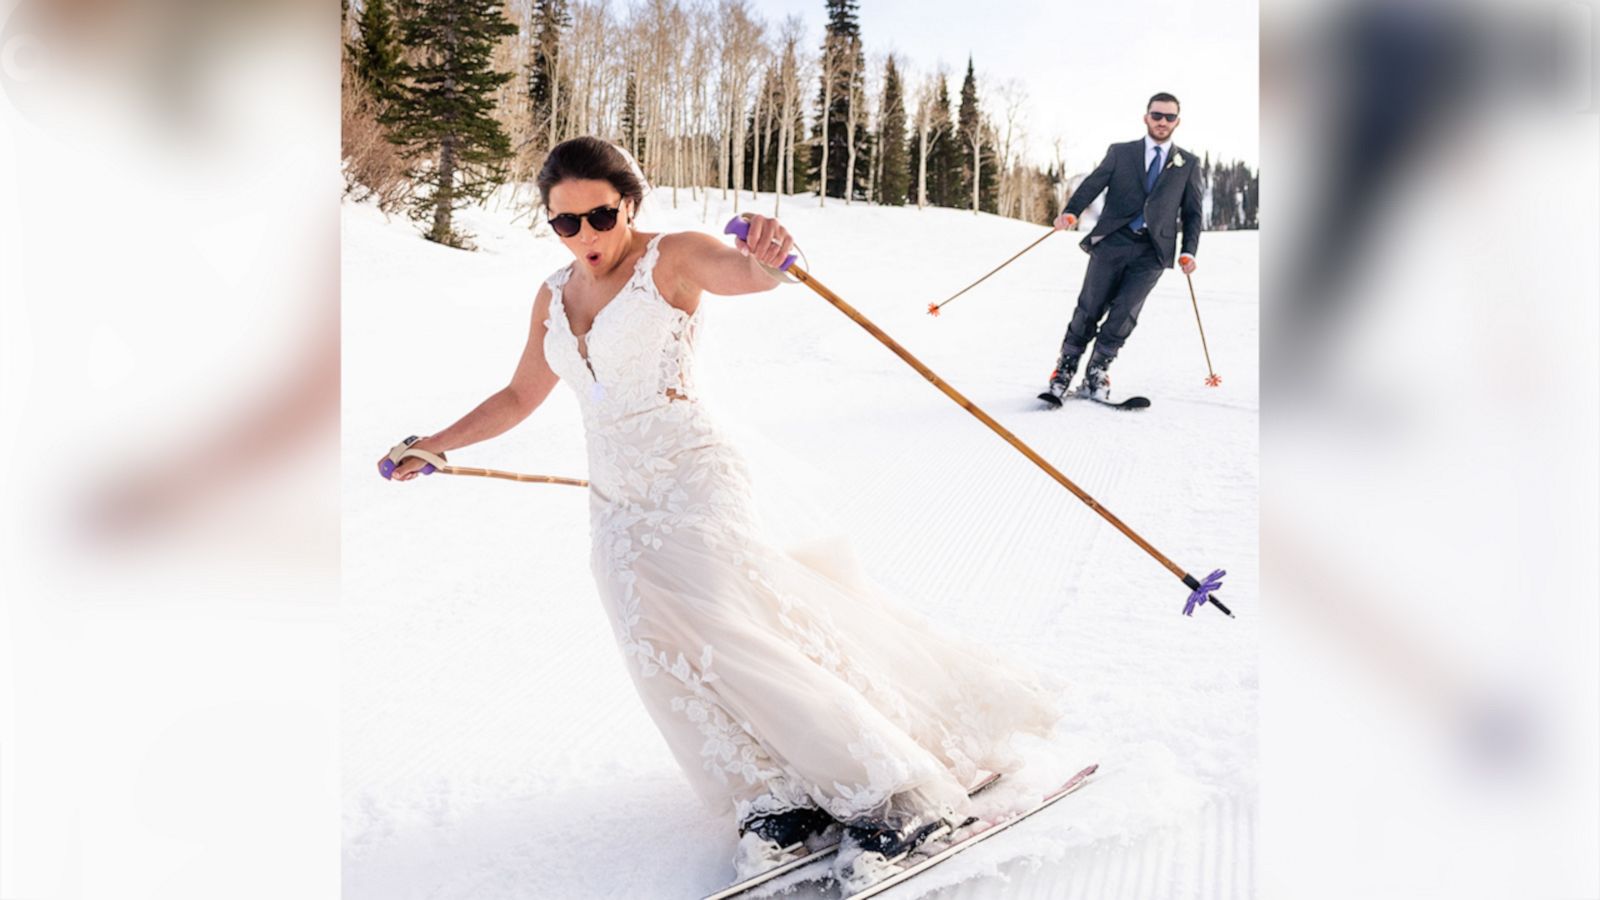 VIDEO: Epic ‘ski wedding’ photoshoot goes viral